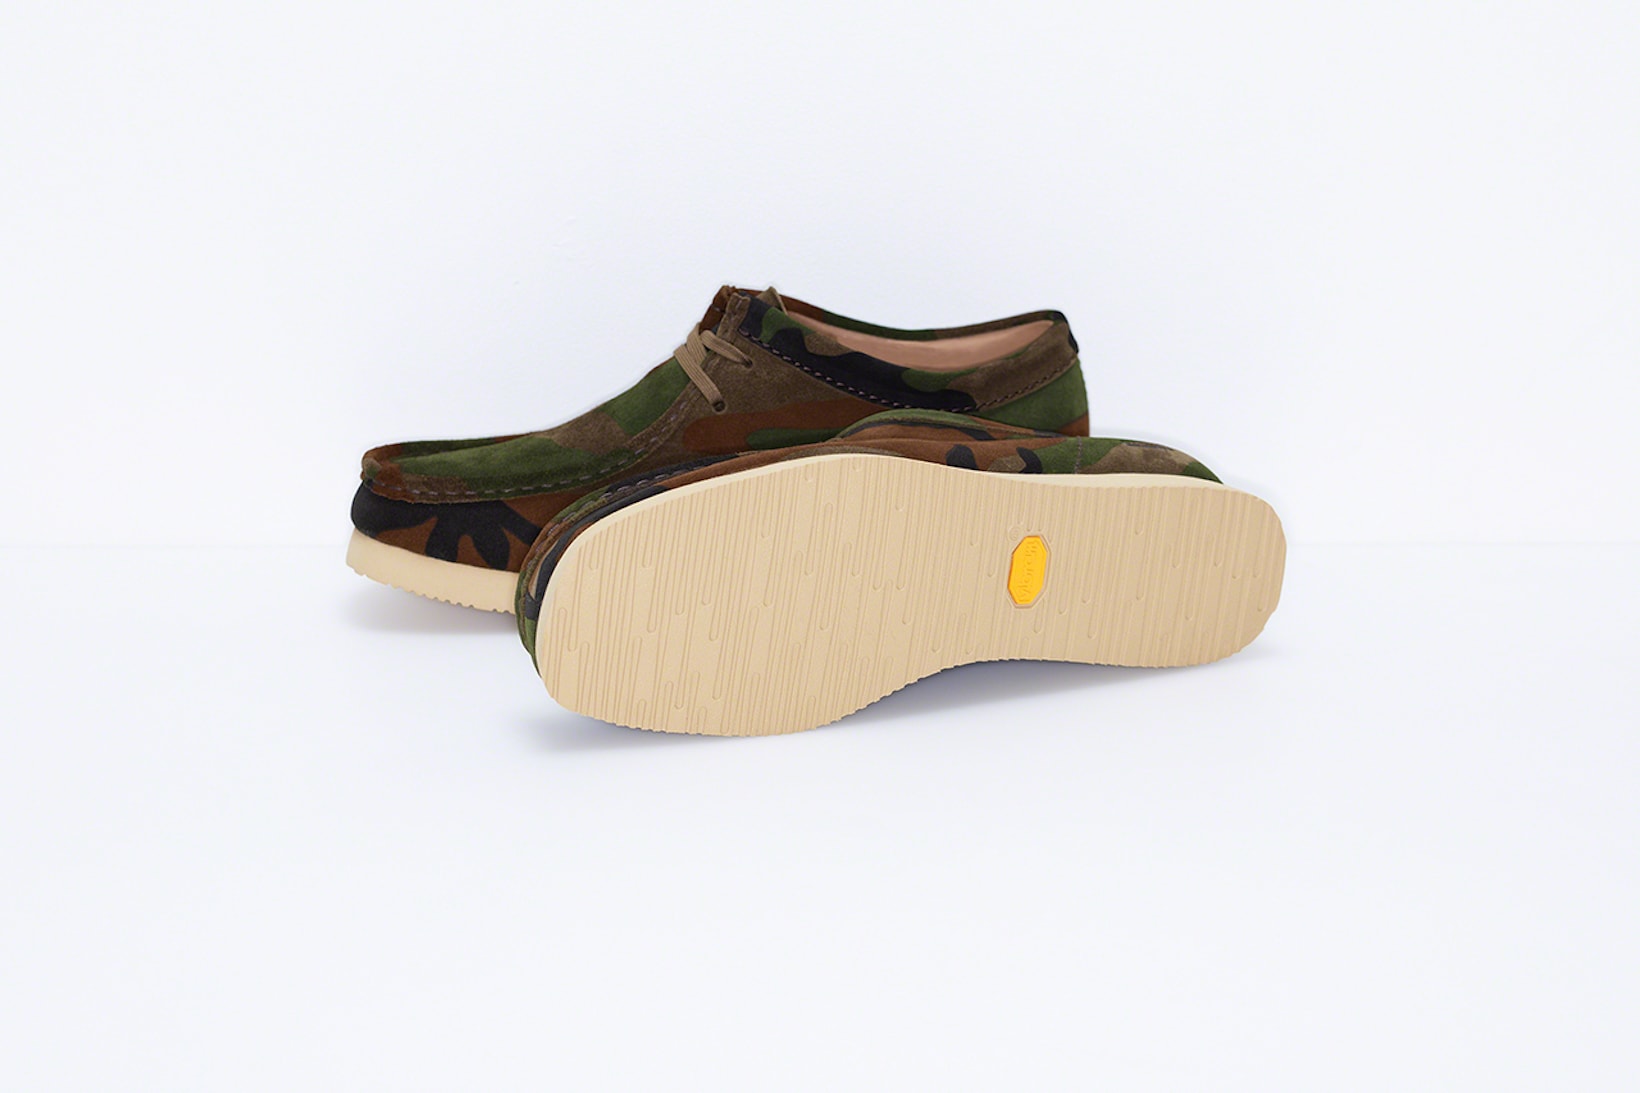 supreme clarks originals custom suede wallabee shoes black purple beige camouflage pattern footwear